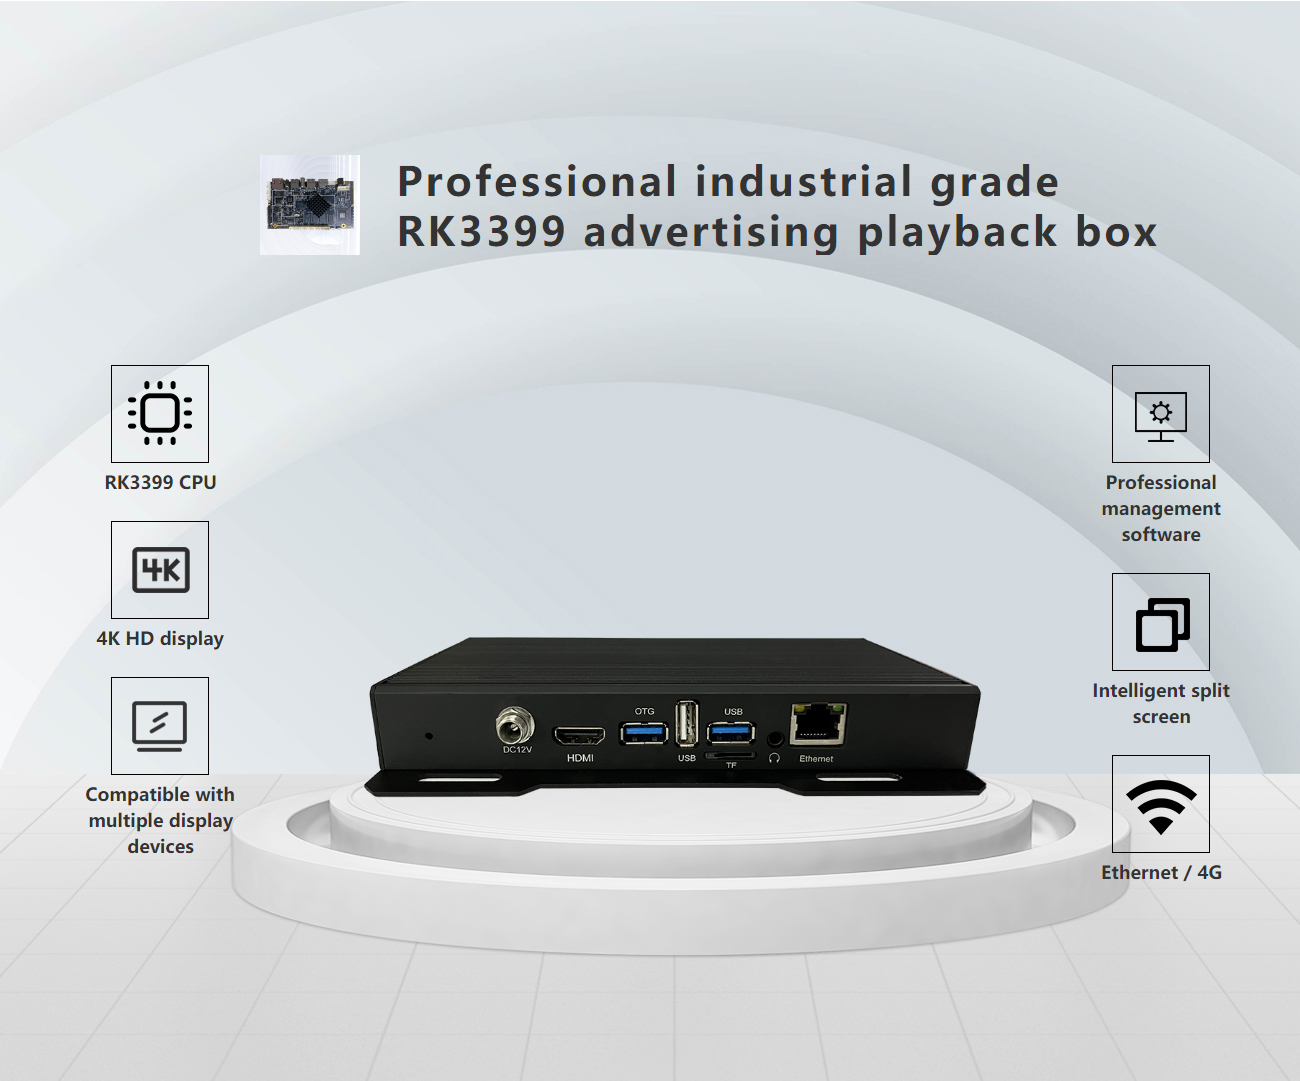 Professional industrial grade RK3399 advertising playback box